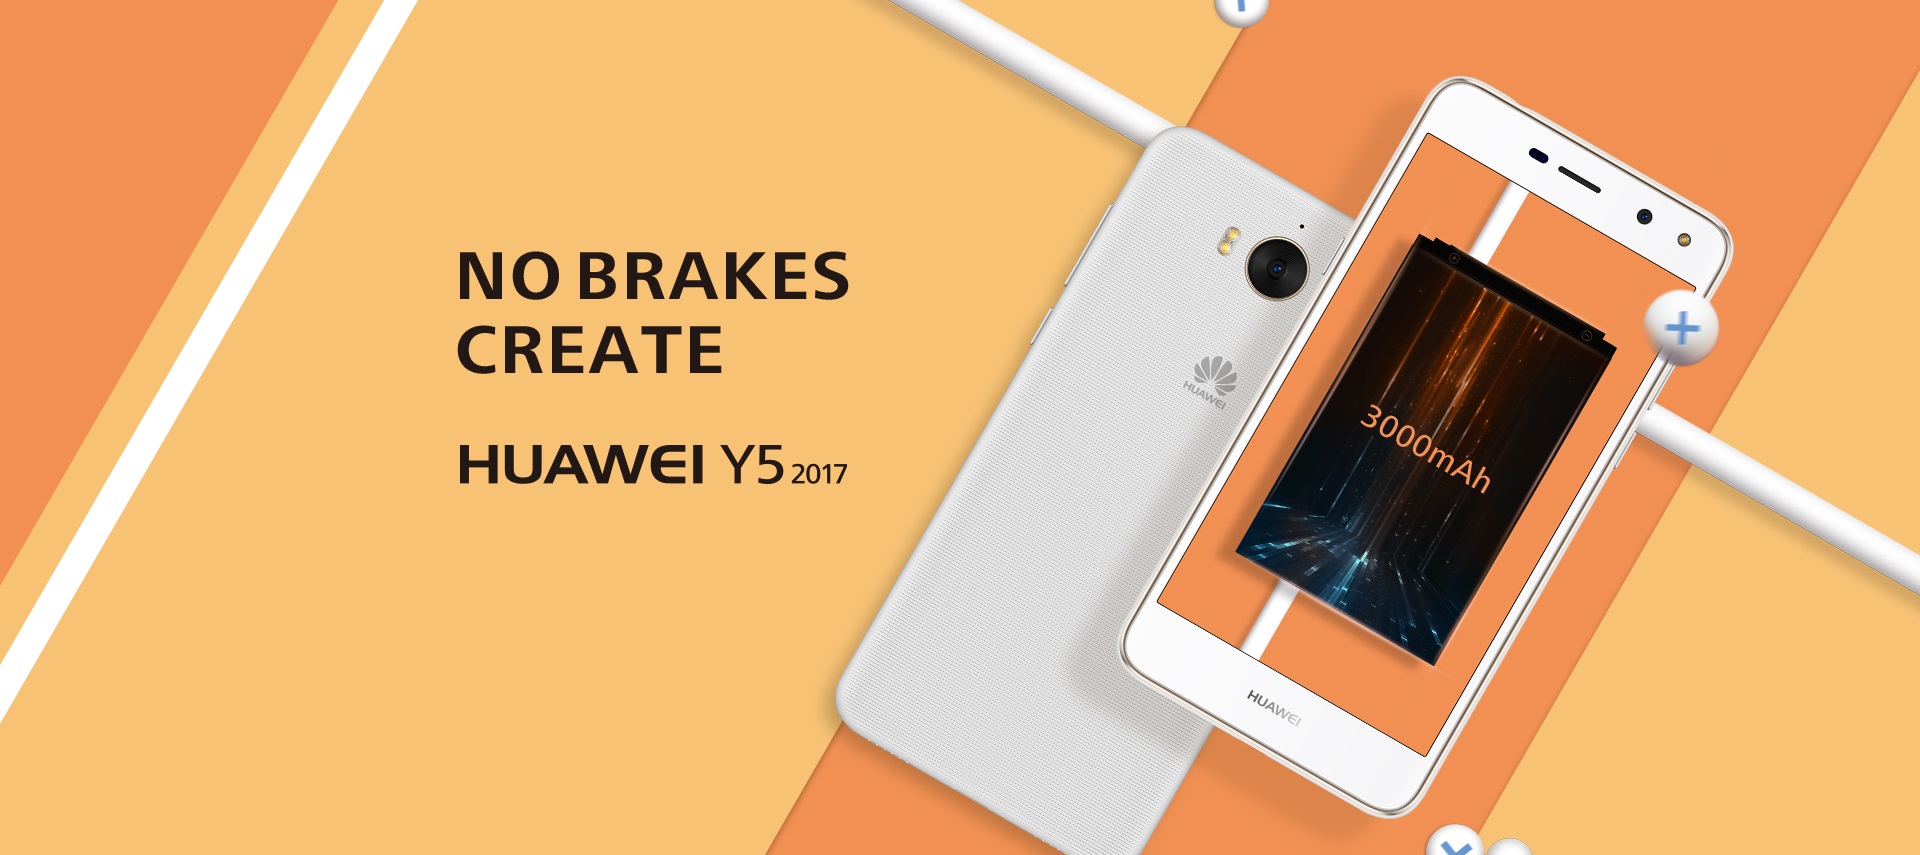 Huawei Y5 (2017) 4G